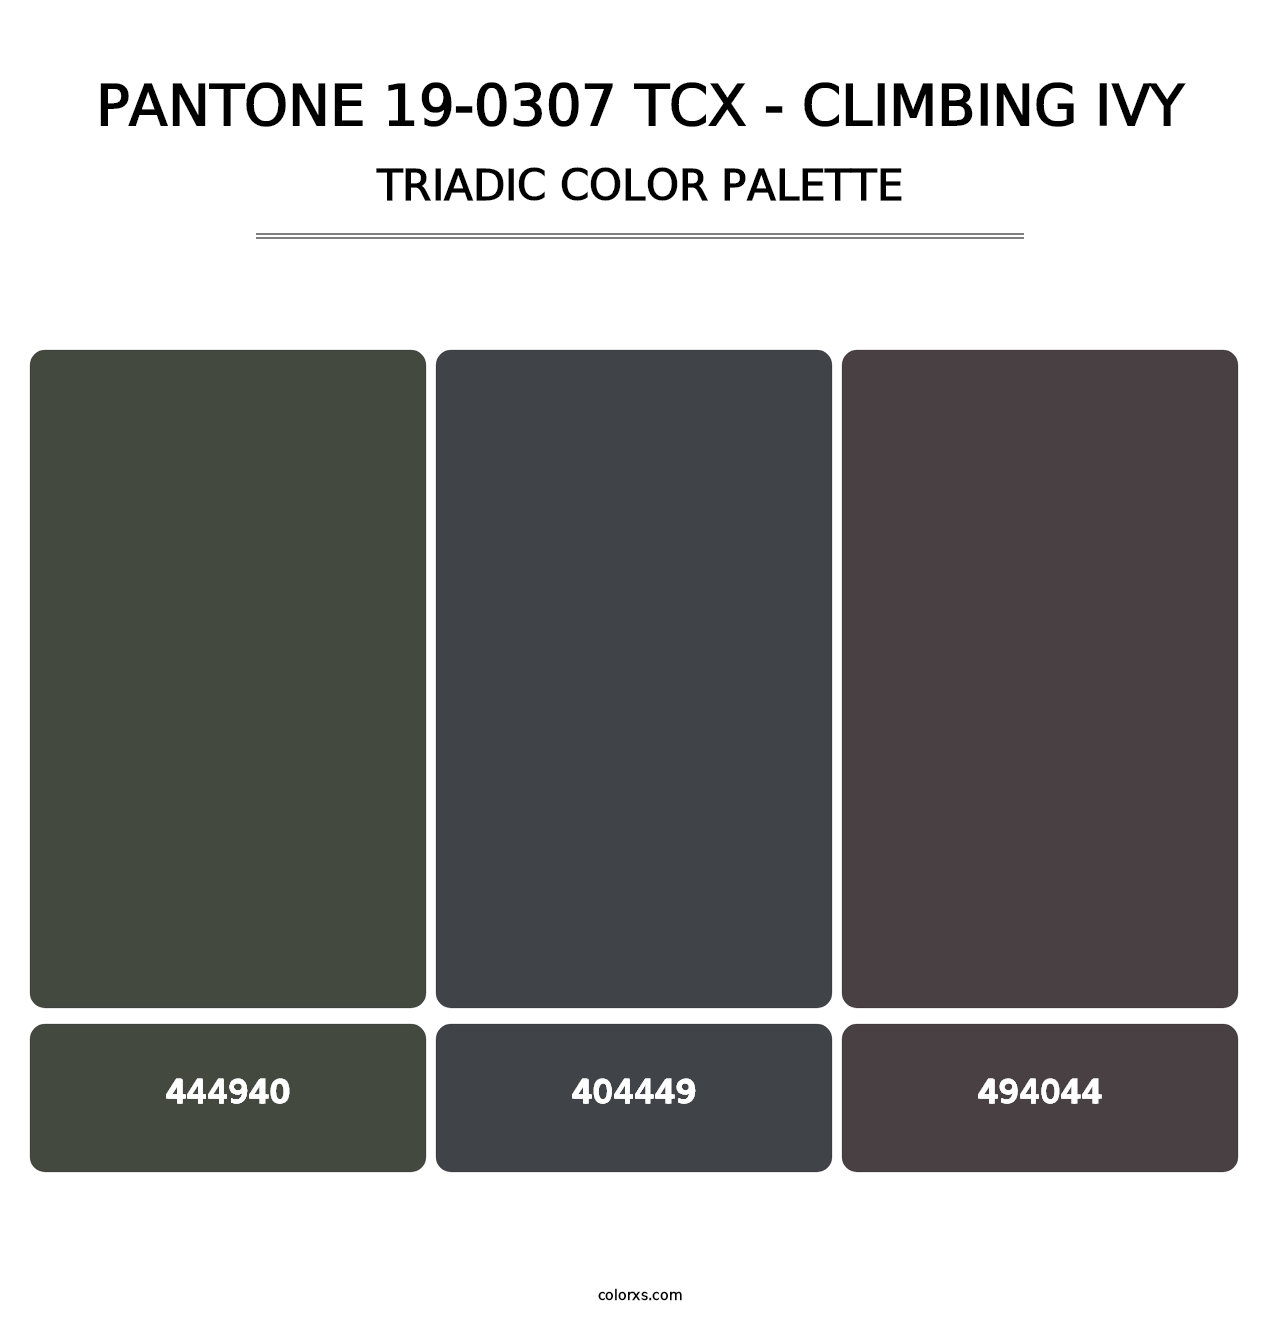 PANTONE 19-0307 TCX - Climbing Ivy - Triadic Color Palette